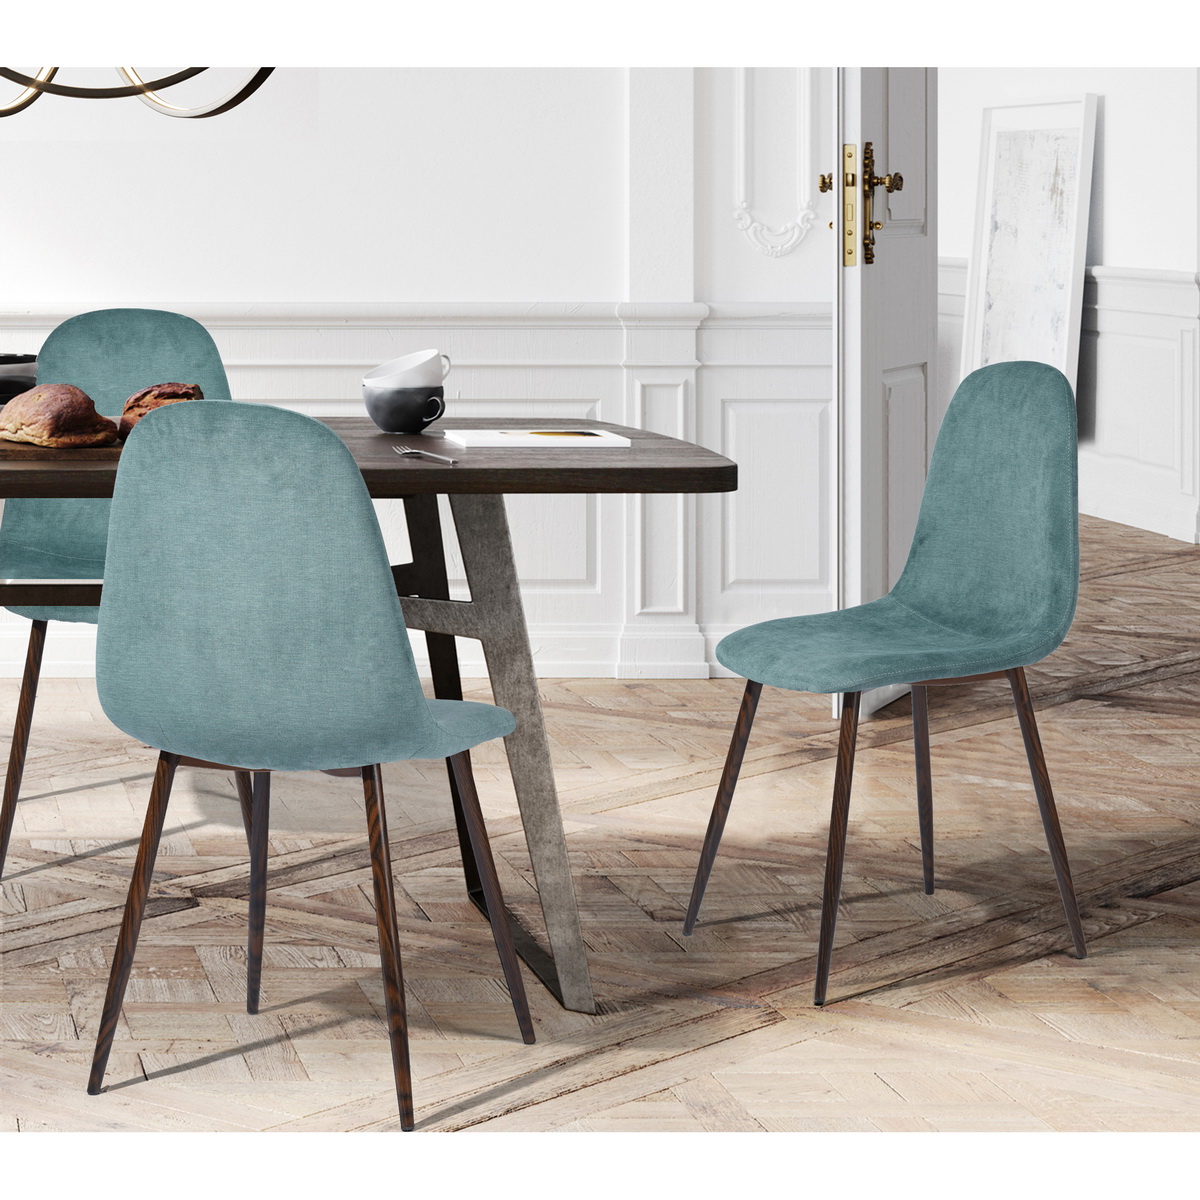 Set of 4 Scandinavian velvet chairs -Mint